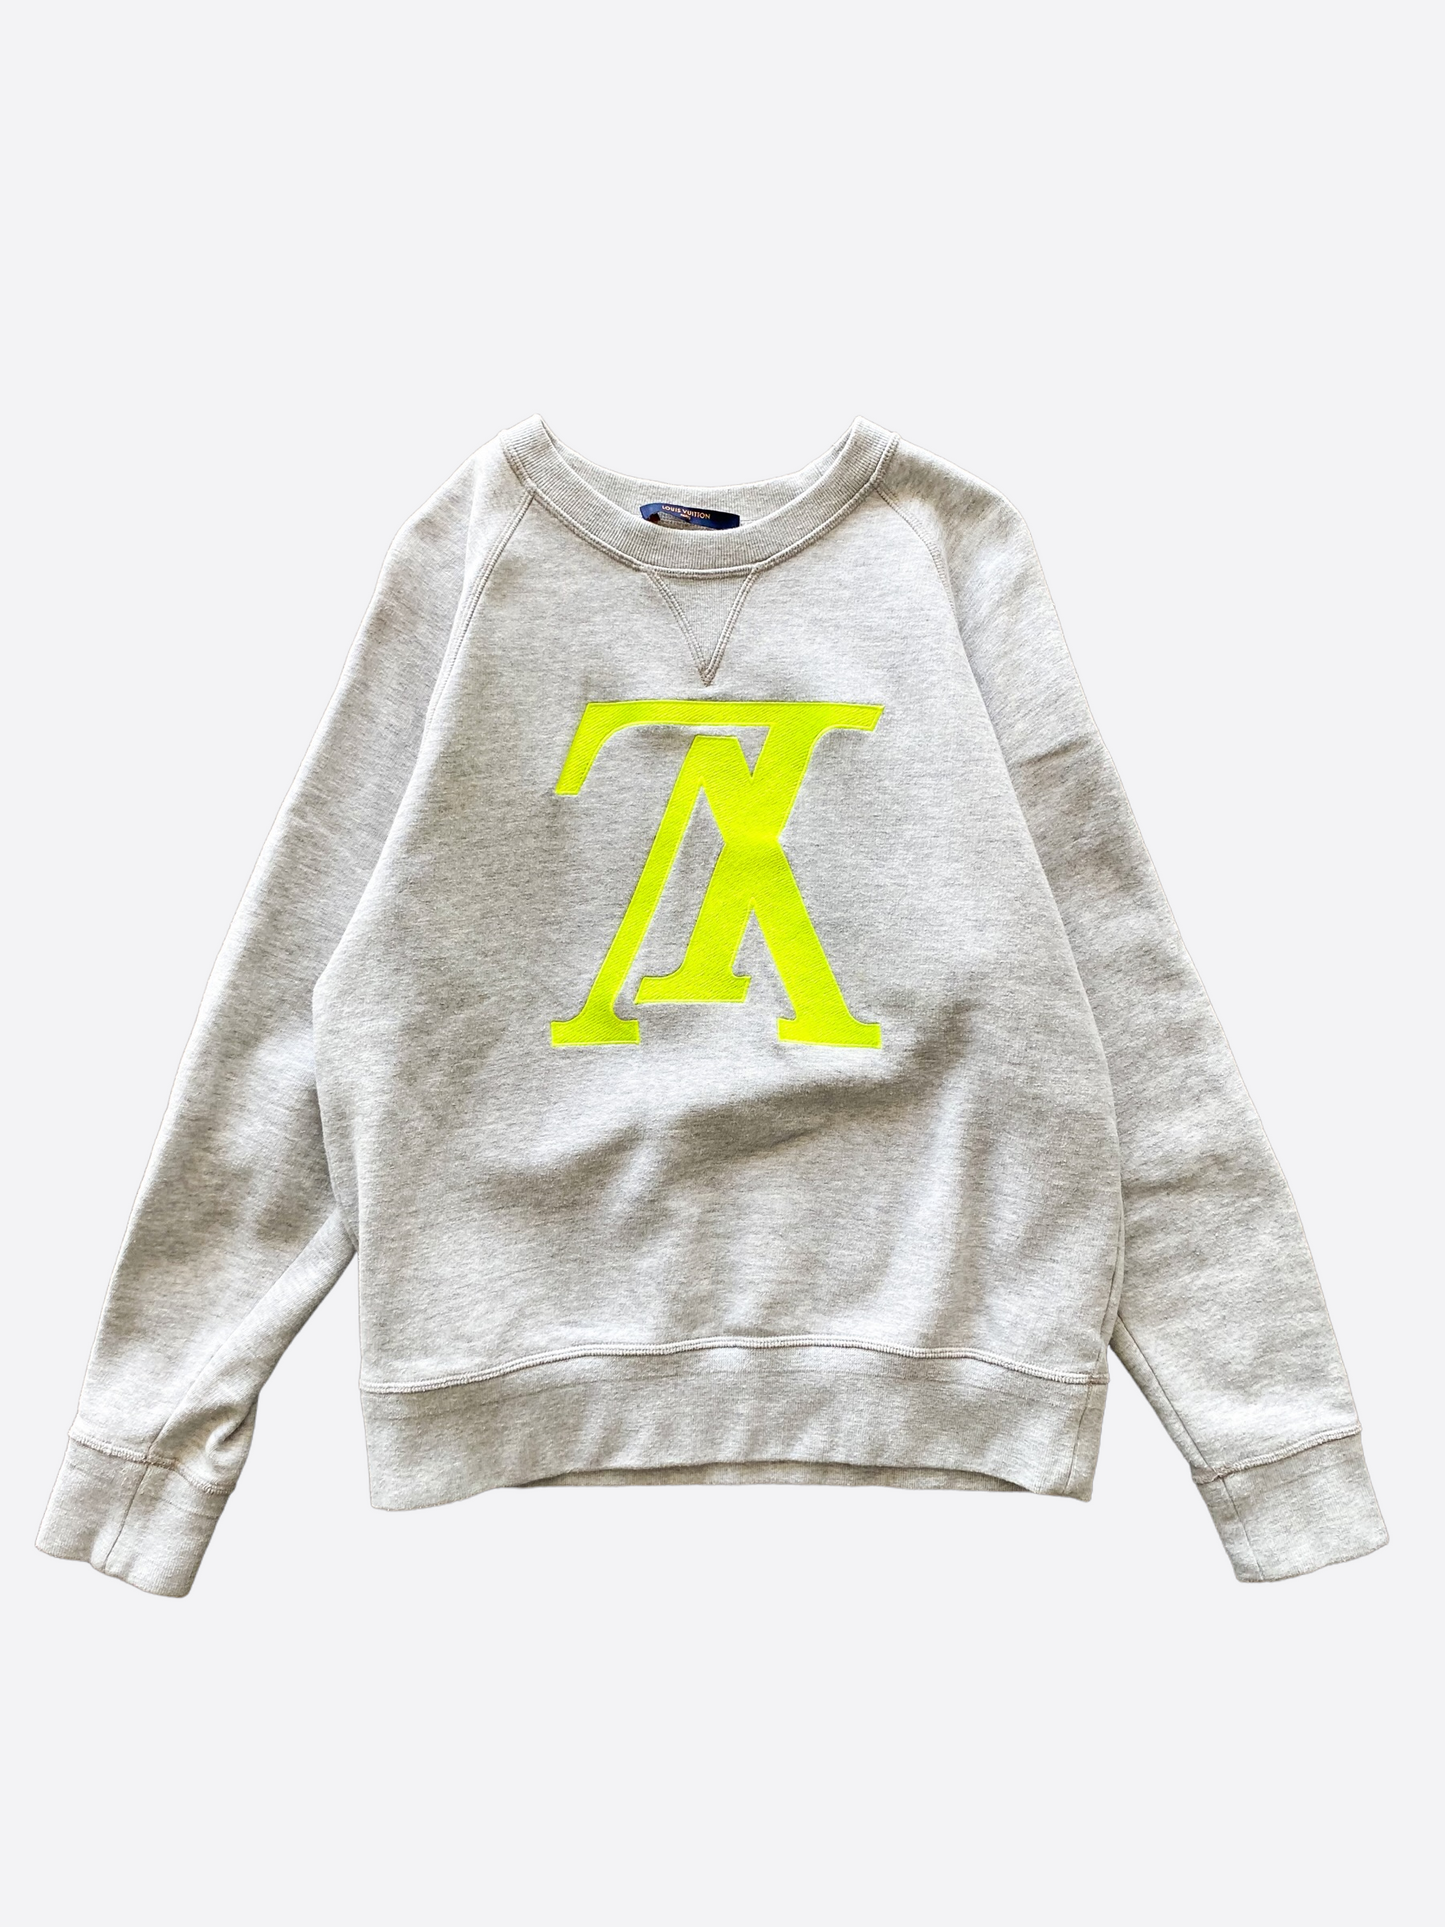 louis vuitton logo sweater